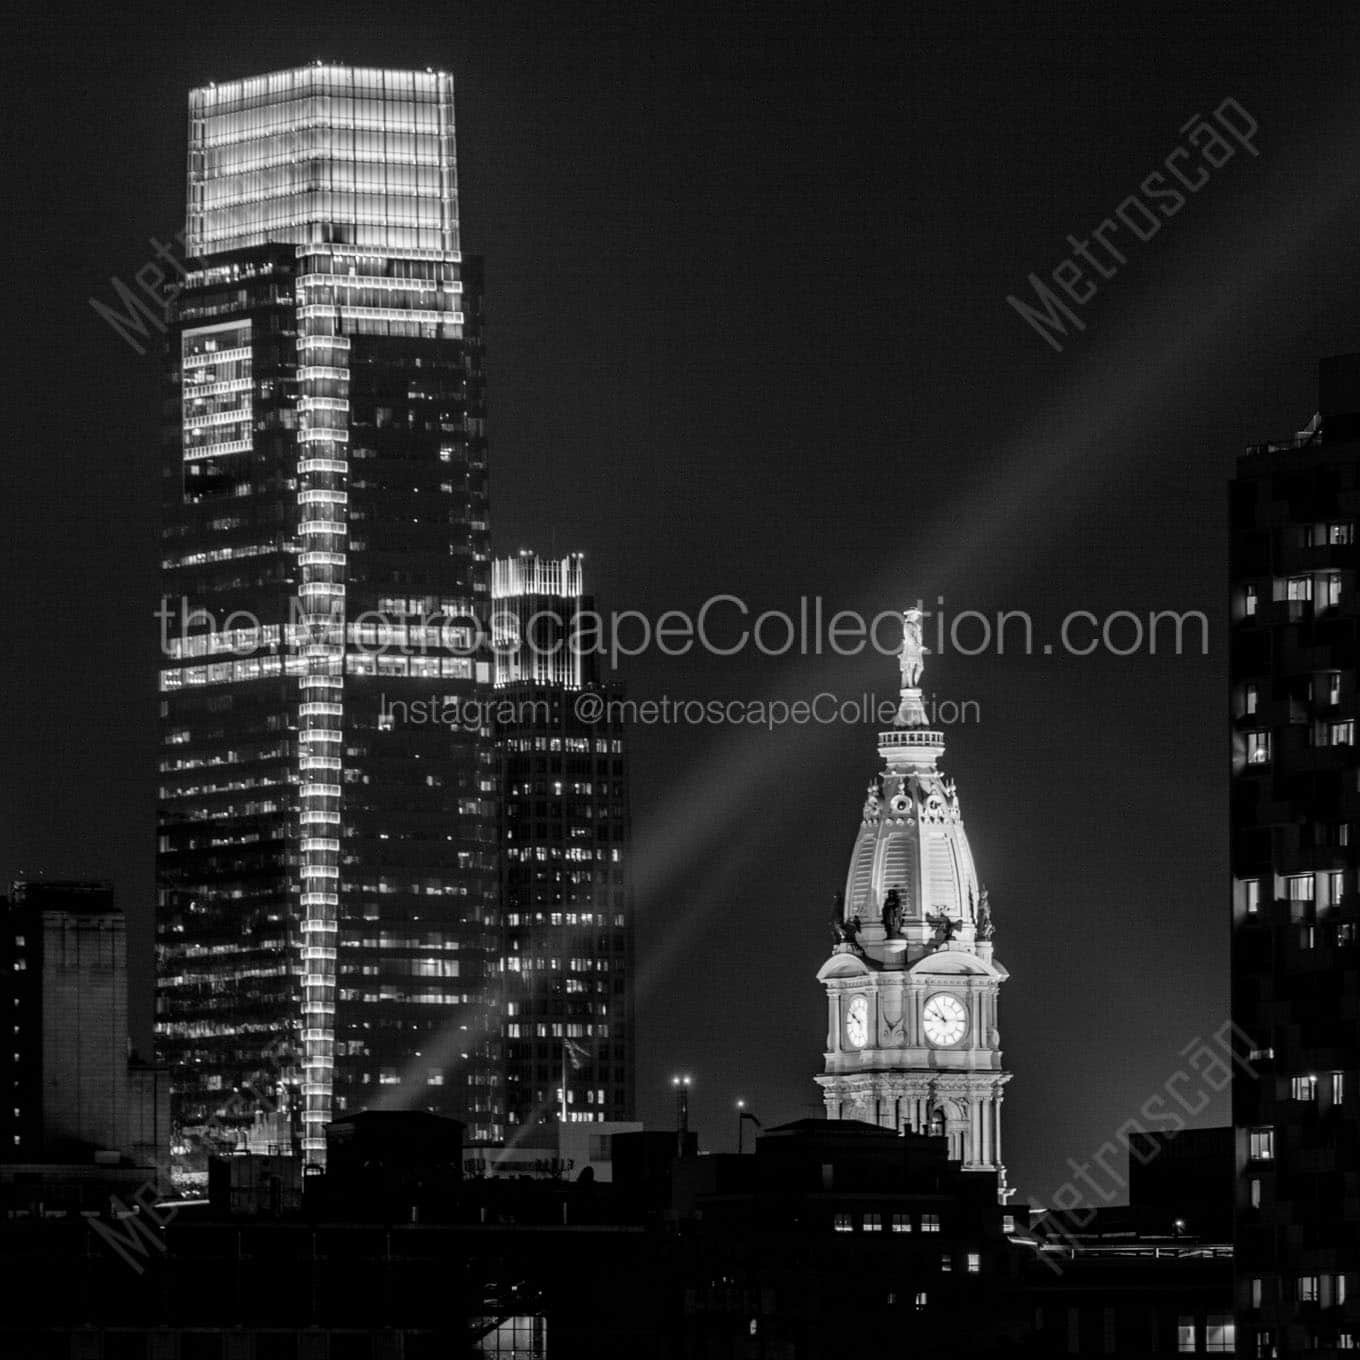 comcast tower philadelphia city hall at night Black & White Office Art